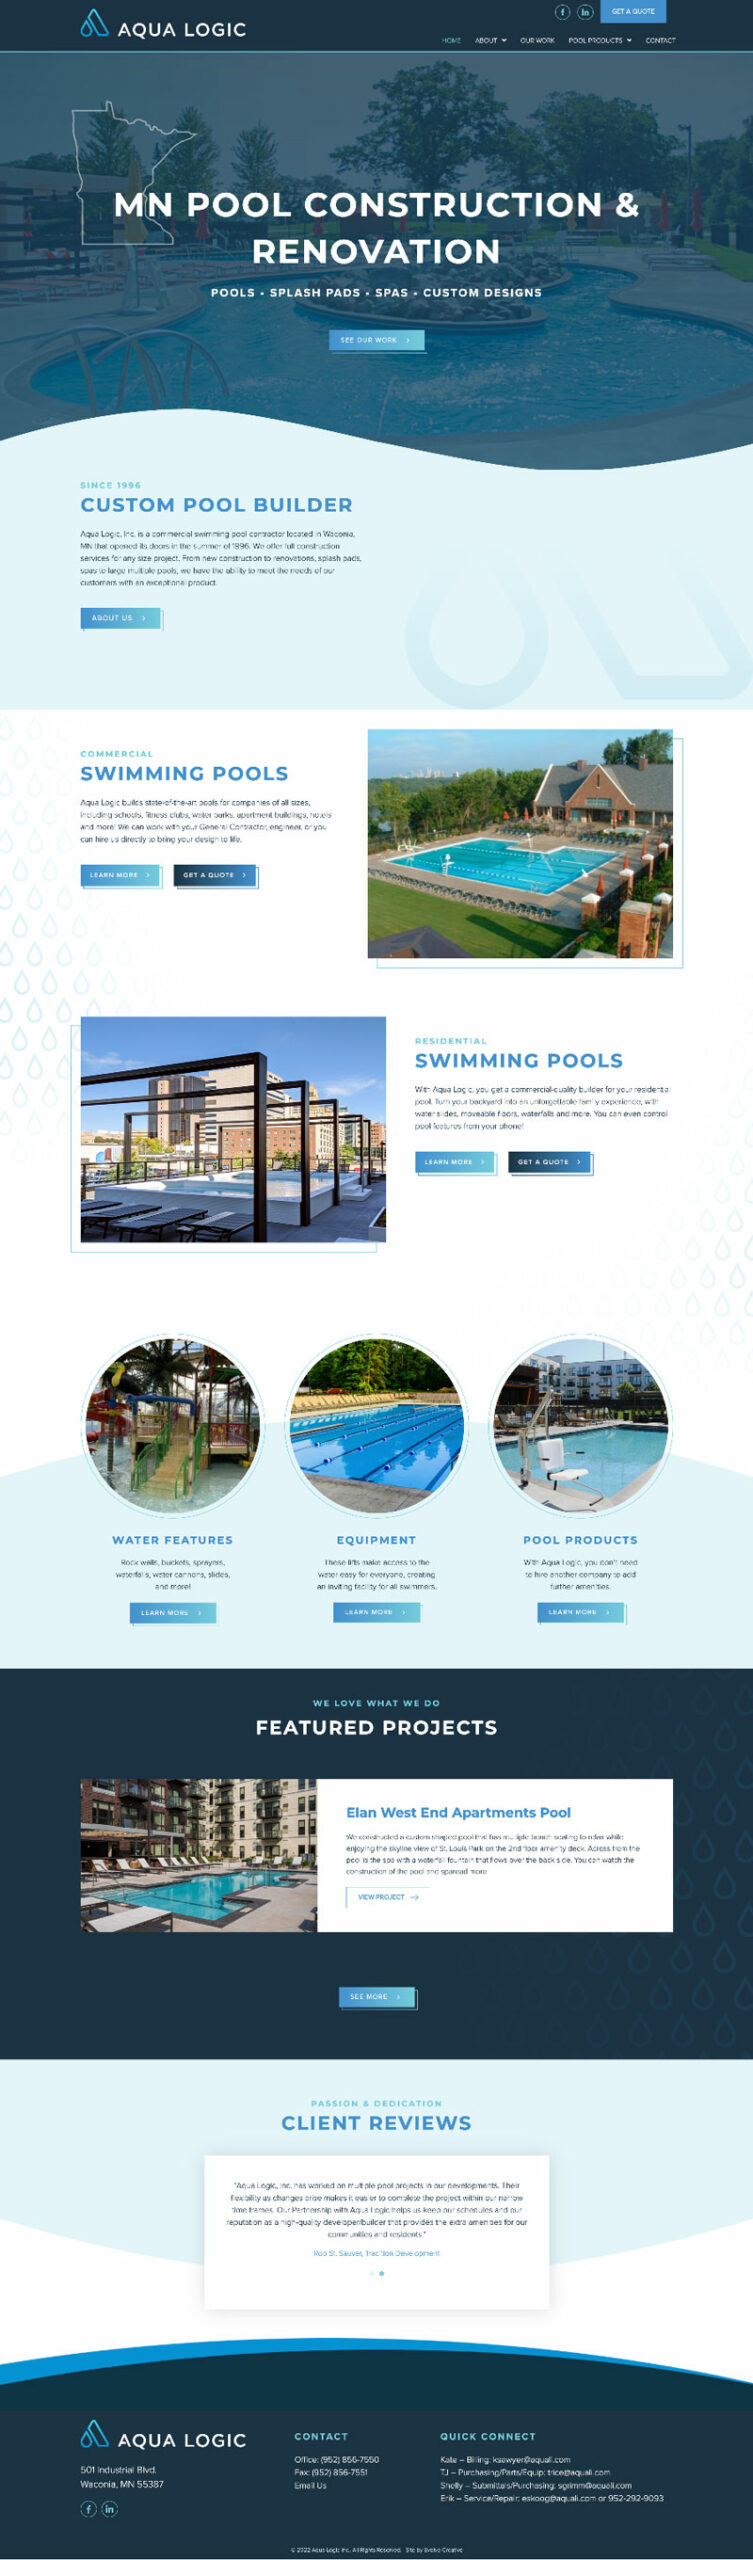 Aqua Logic pool construction website design